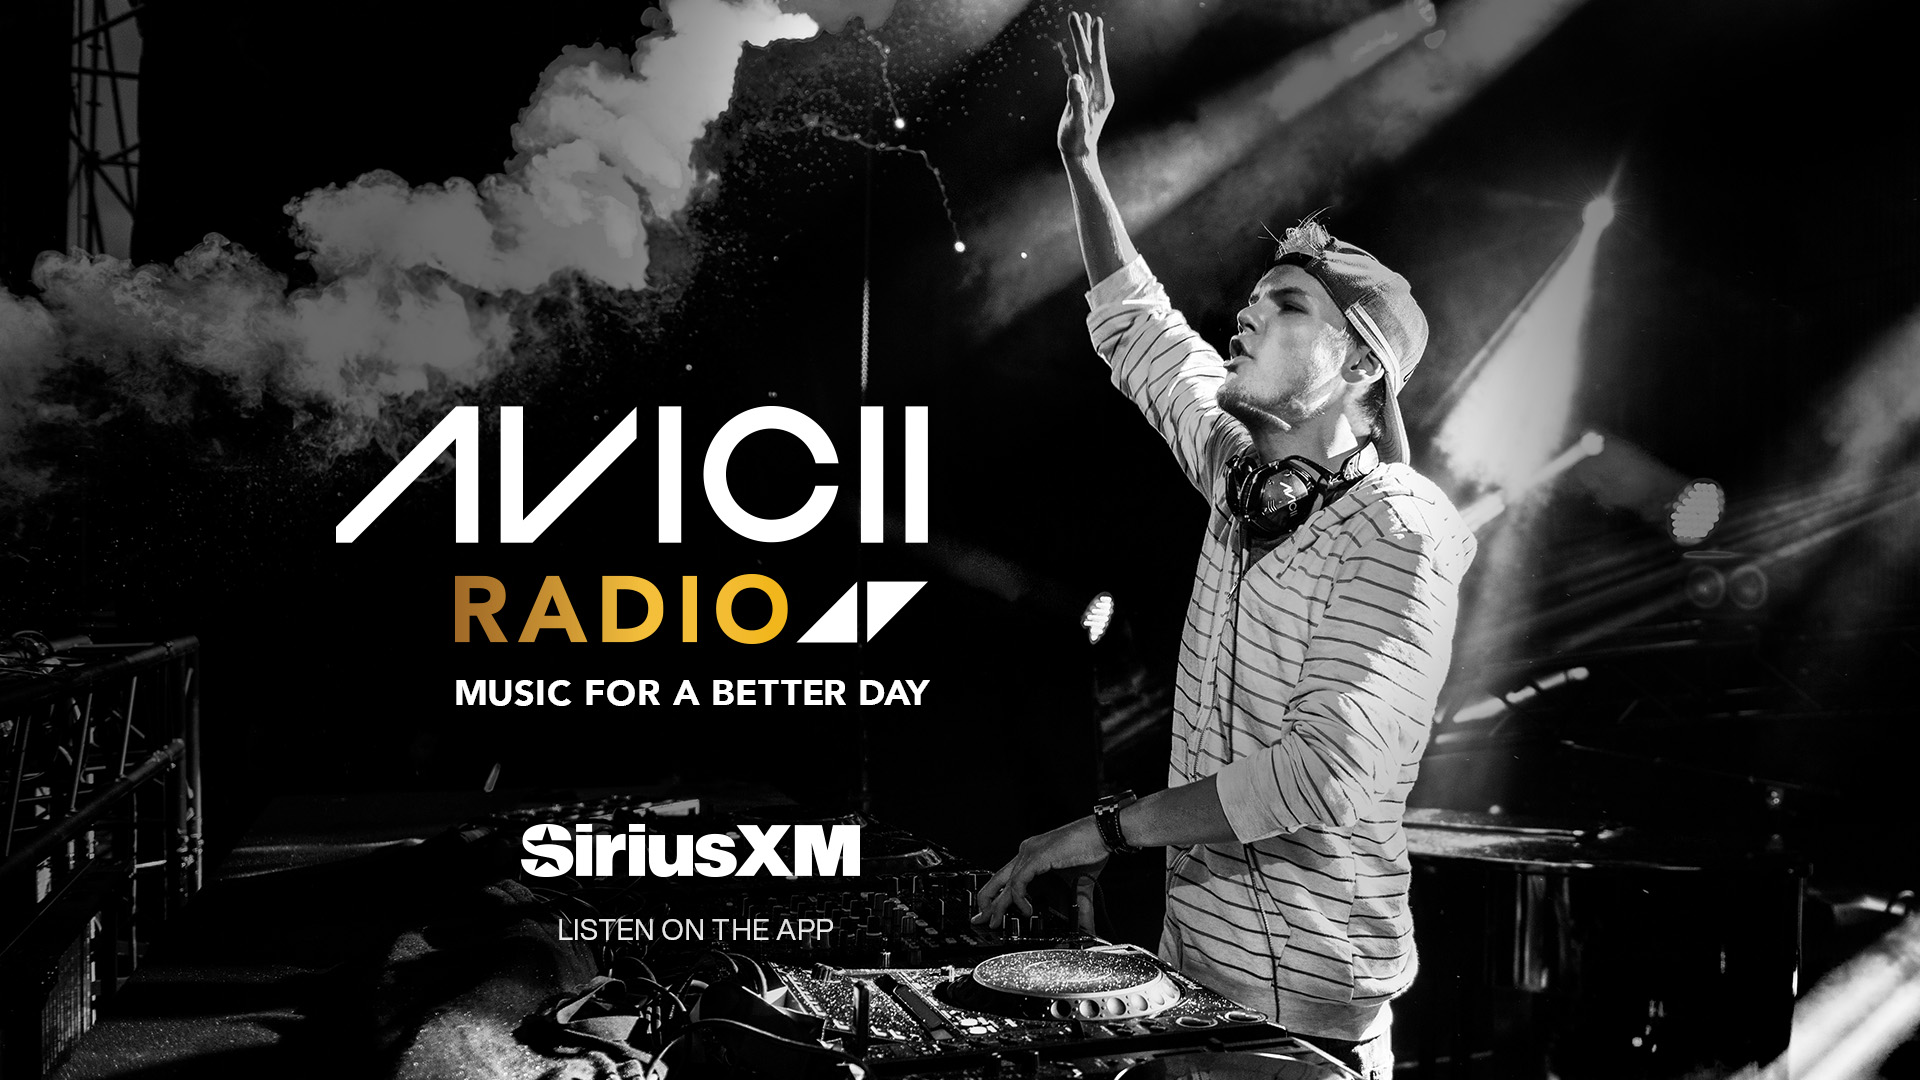 Avicii Radio - Music for a Better Day - SiriusXM - Listen on the App